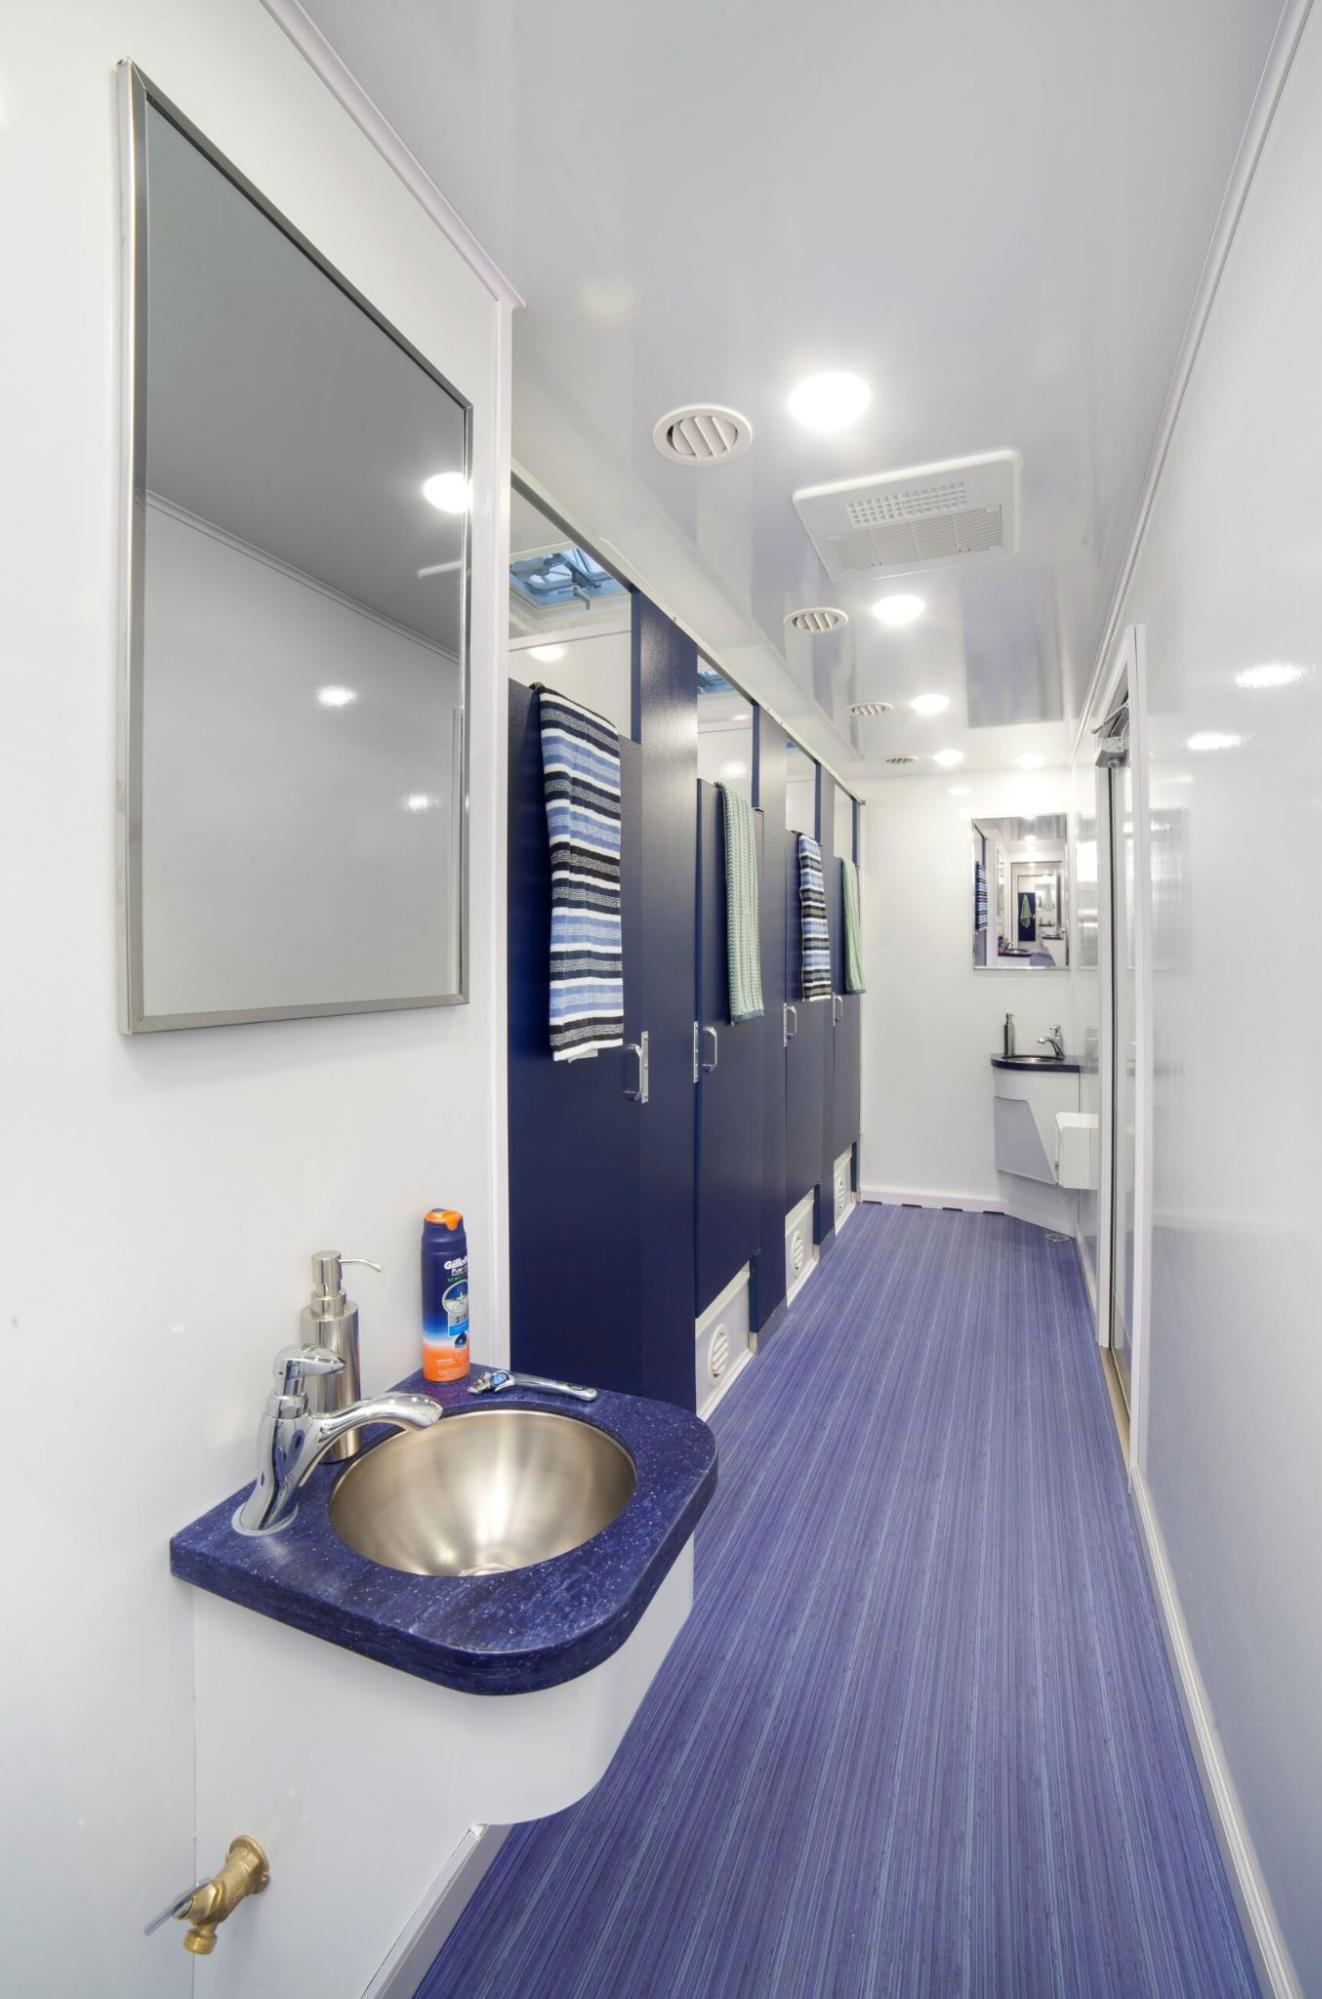 interior of shower trailer